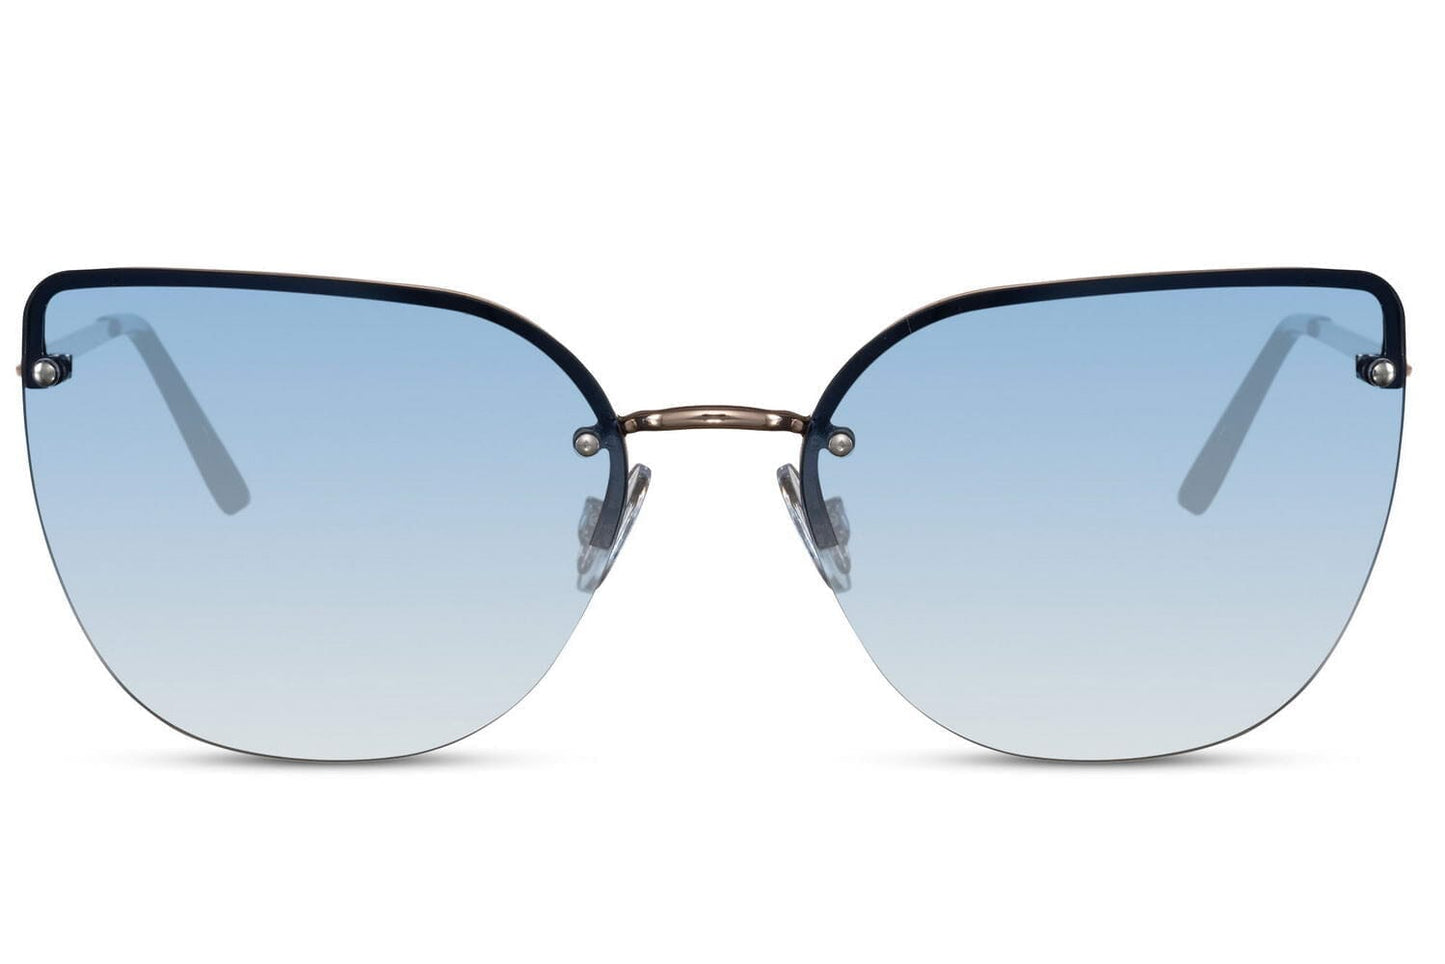 Blue lens shades. UV400 protected. Metal frames. Black flat top effect.